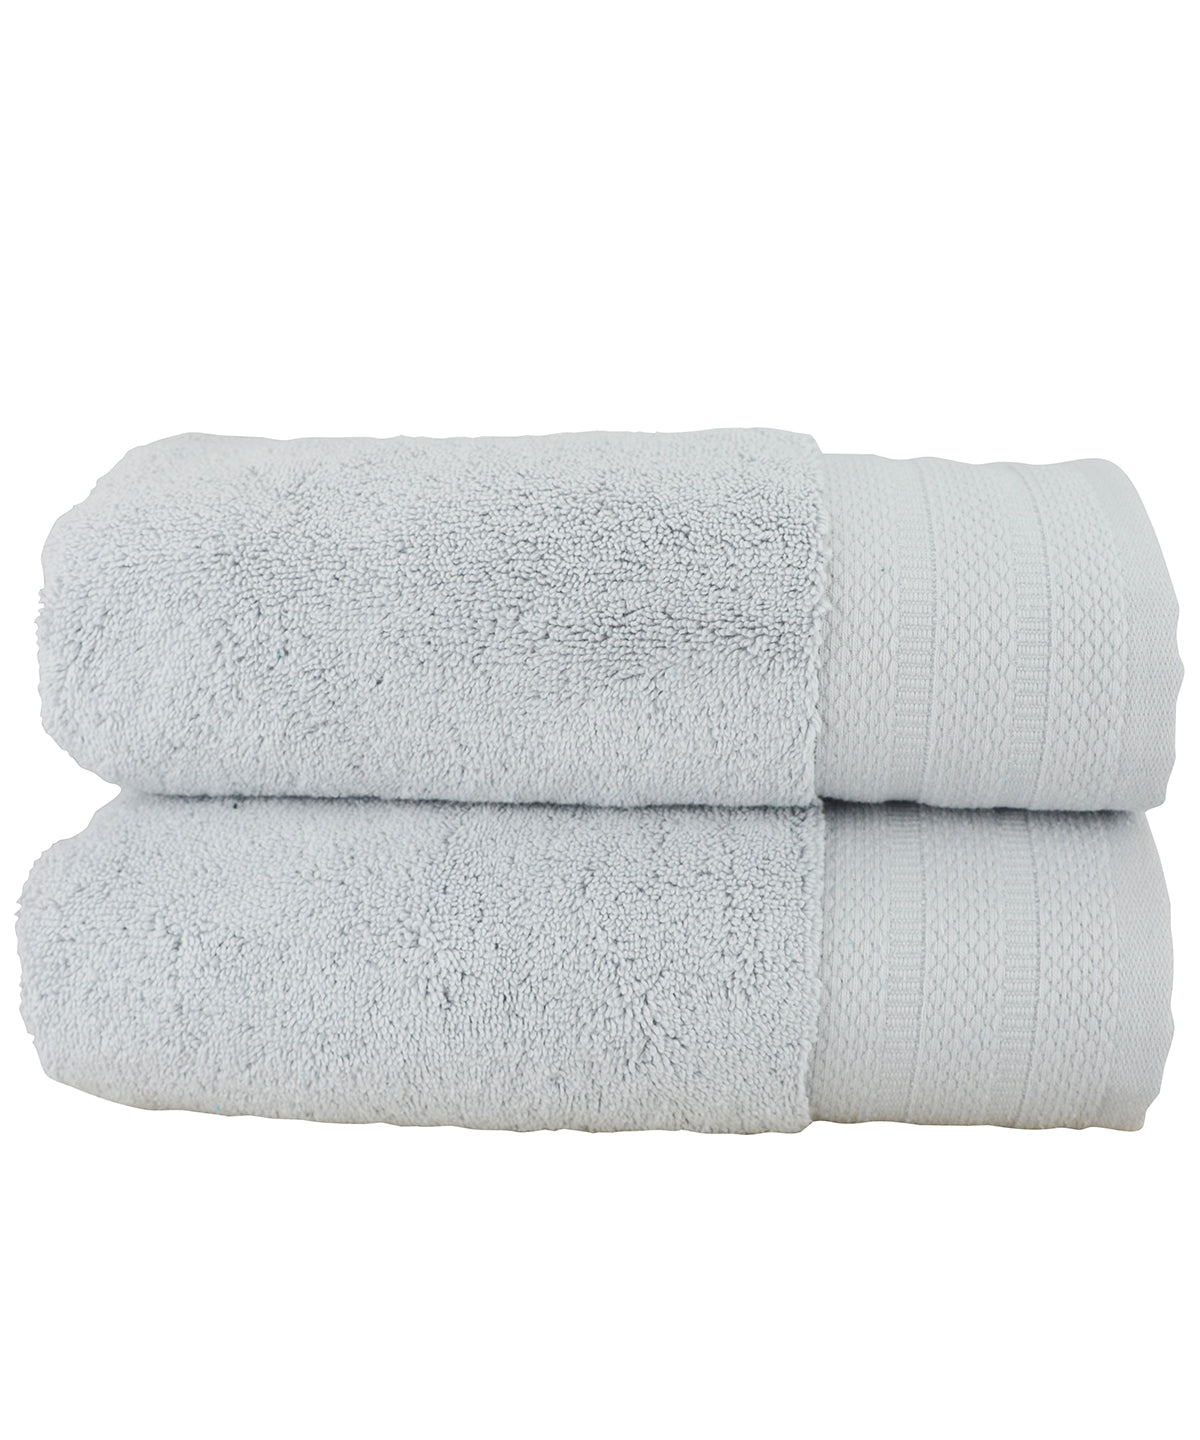 ARTG® Pure luxe hand towel